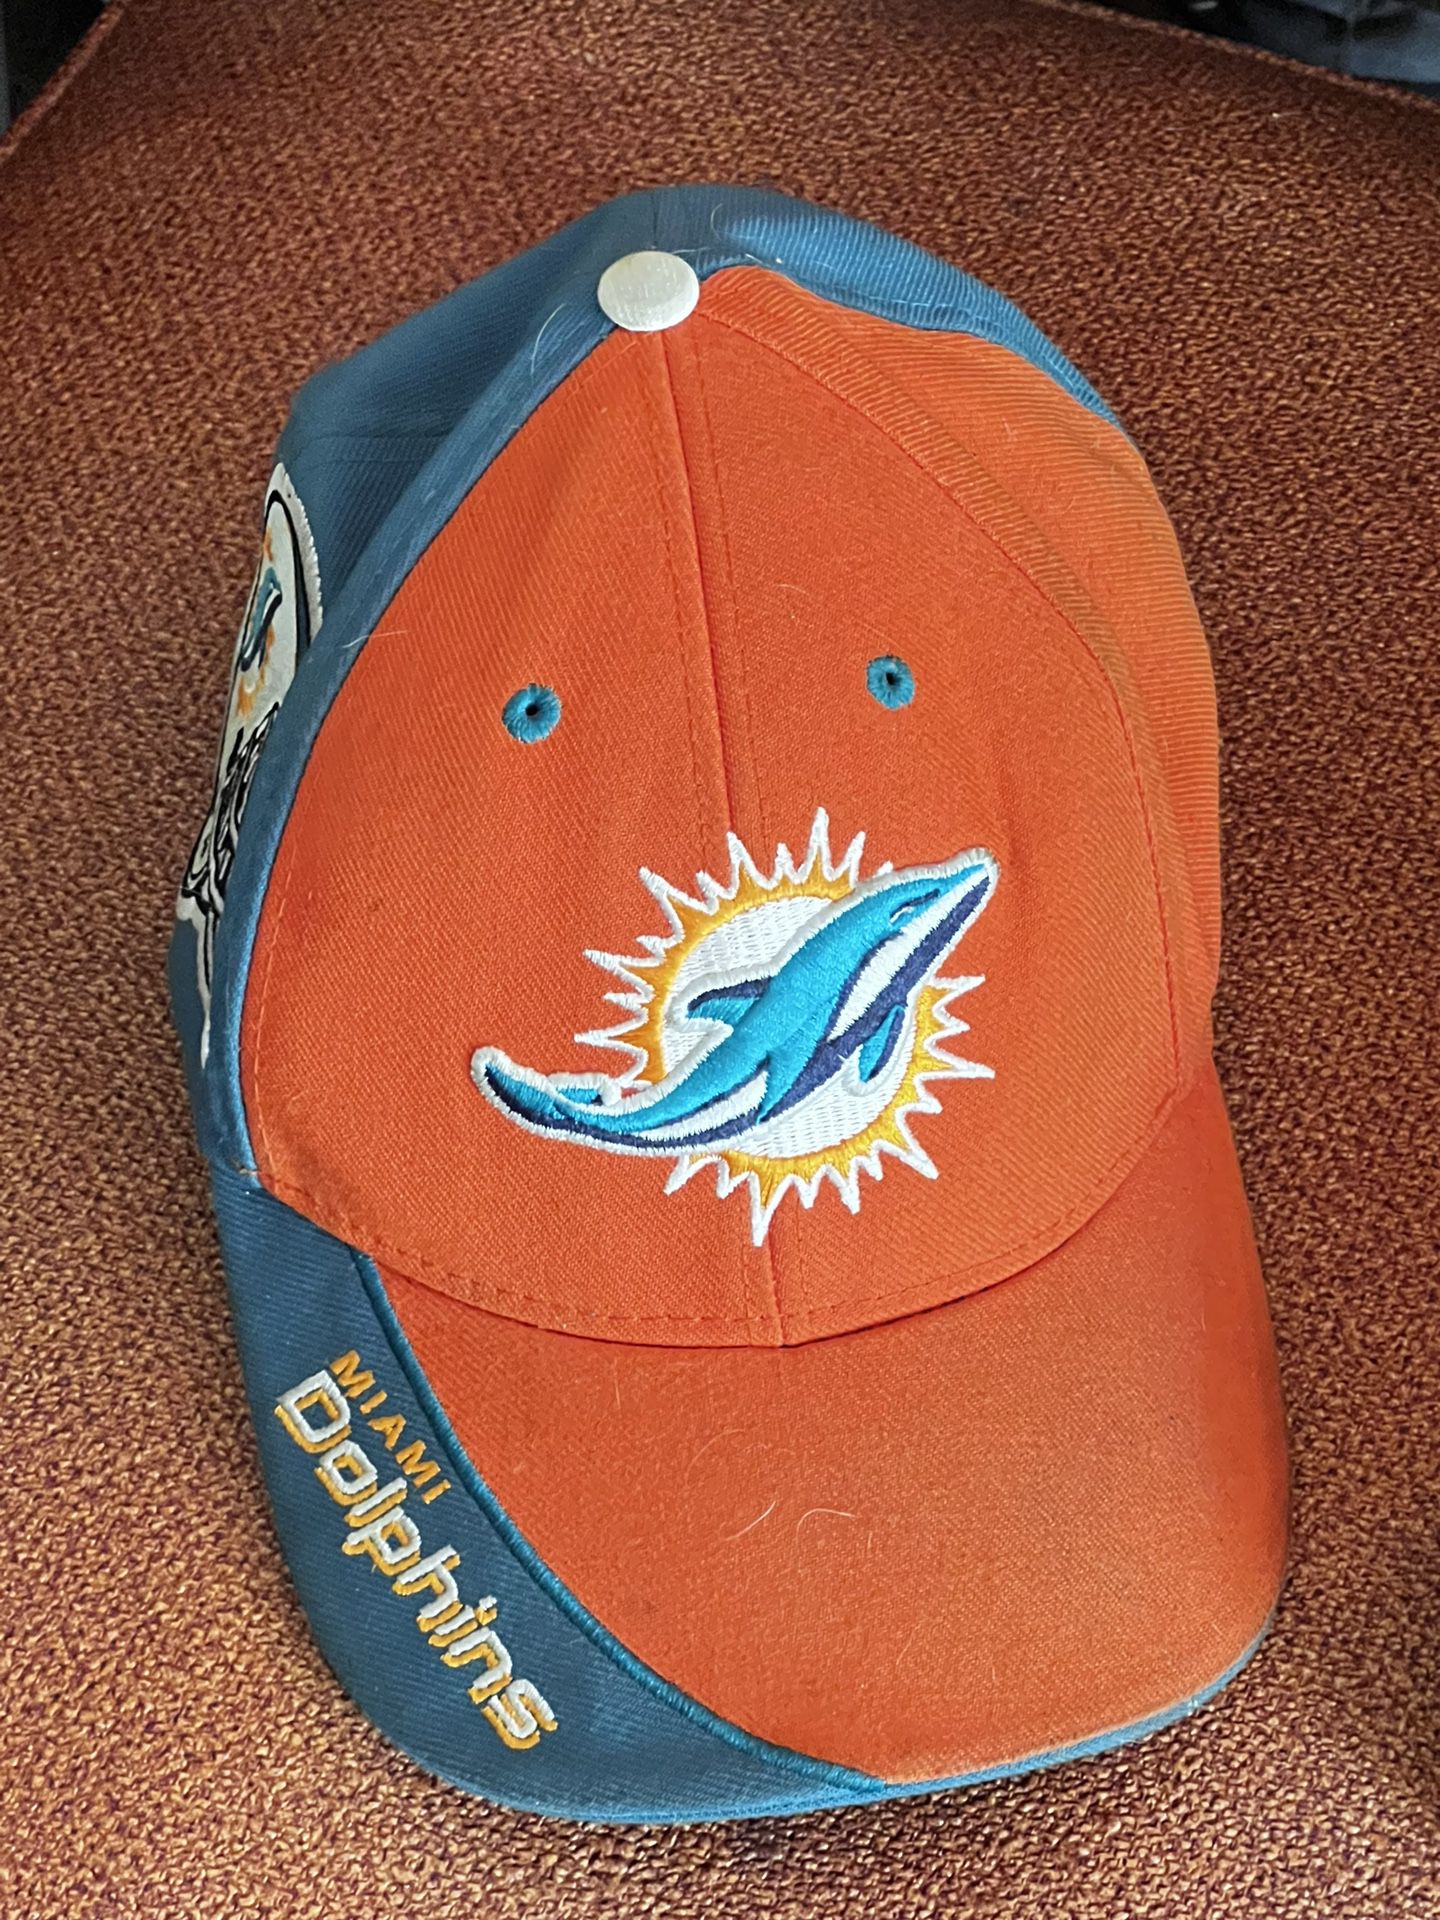 Miami Dolphins Hat